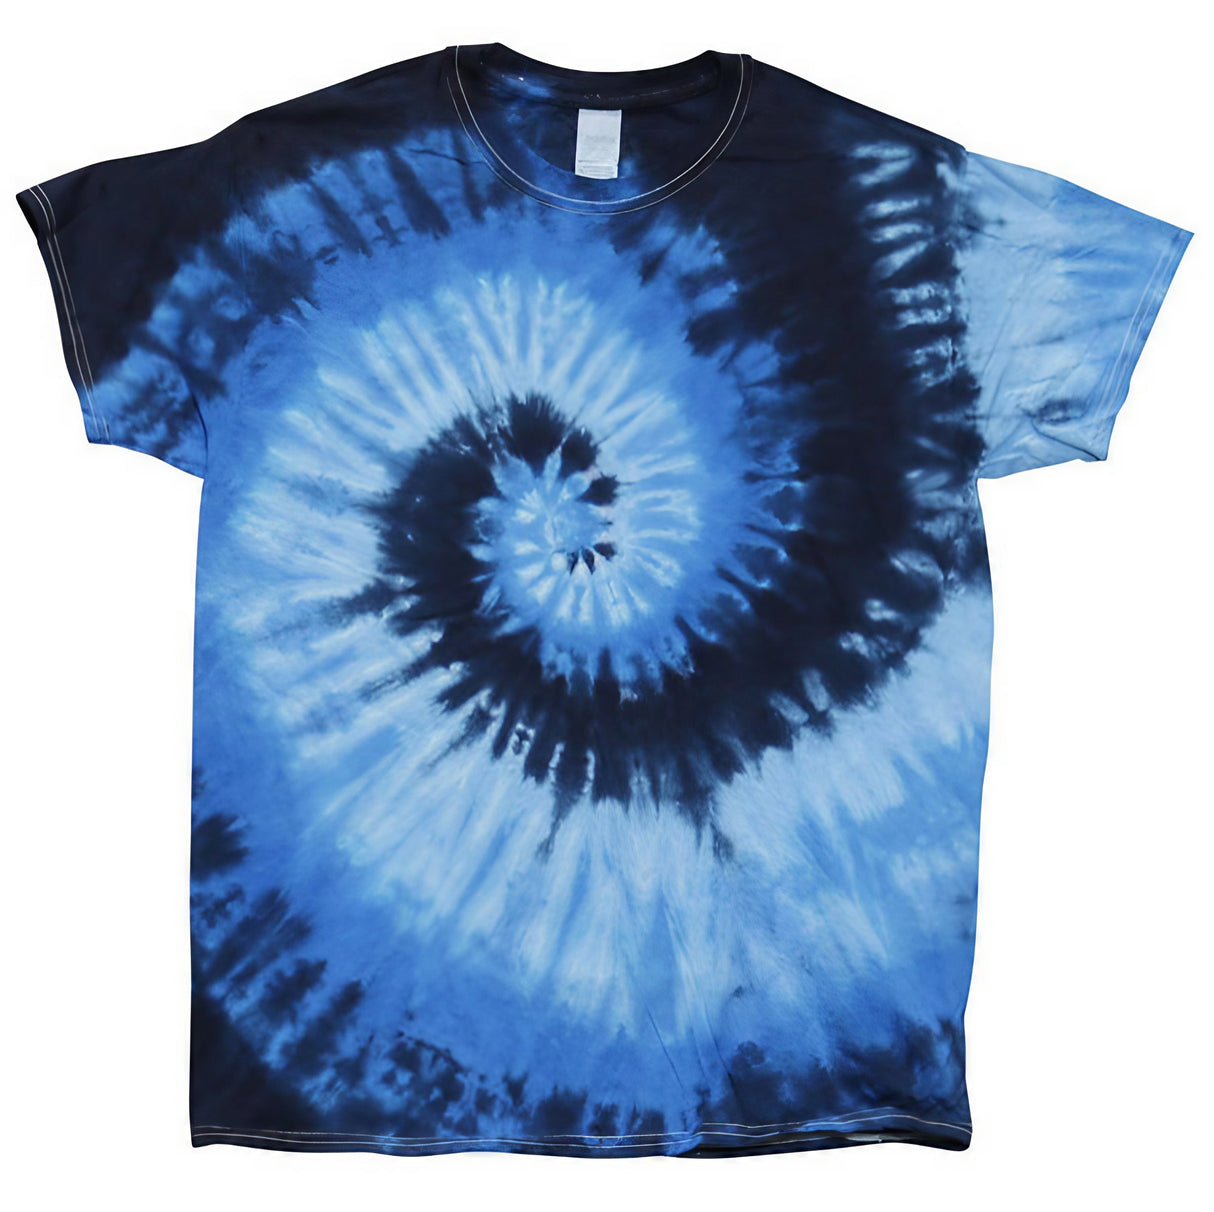 Colortone Blue Ocean Tie-Dye T-Shirt, Unisex Cotton Tee with Swirl Pattern, Front View